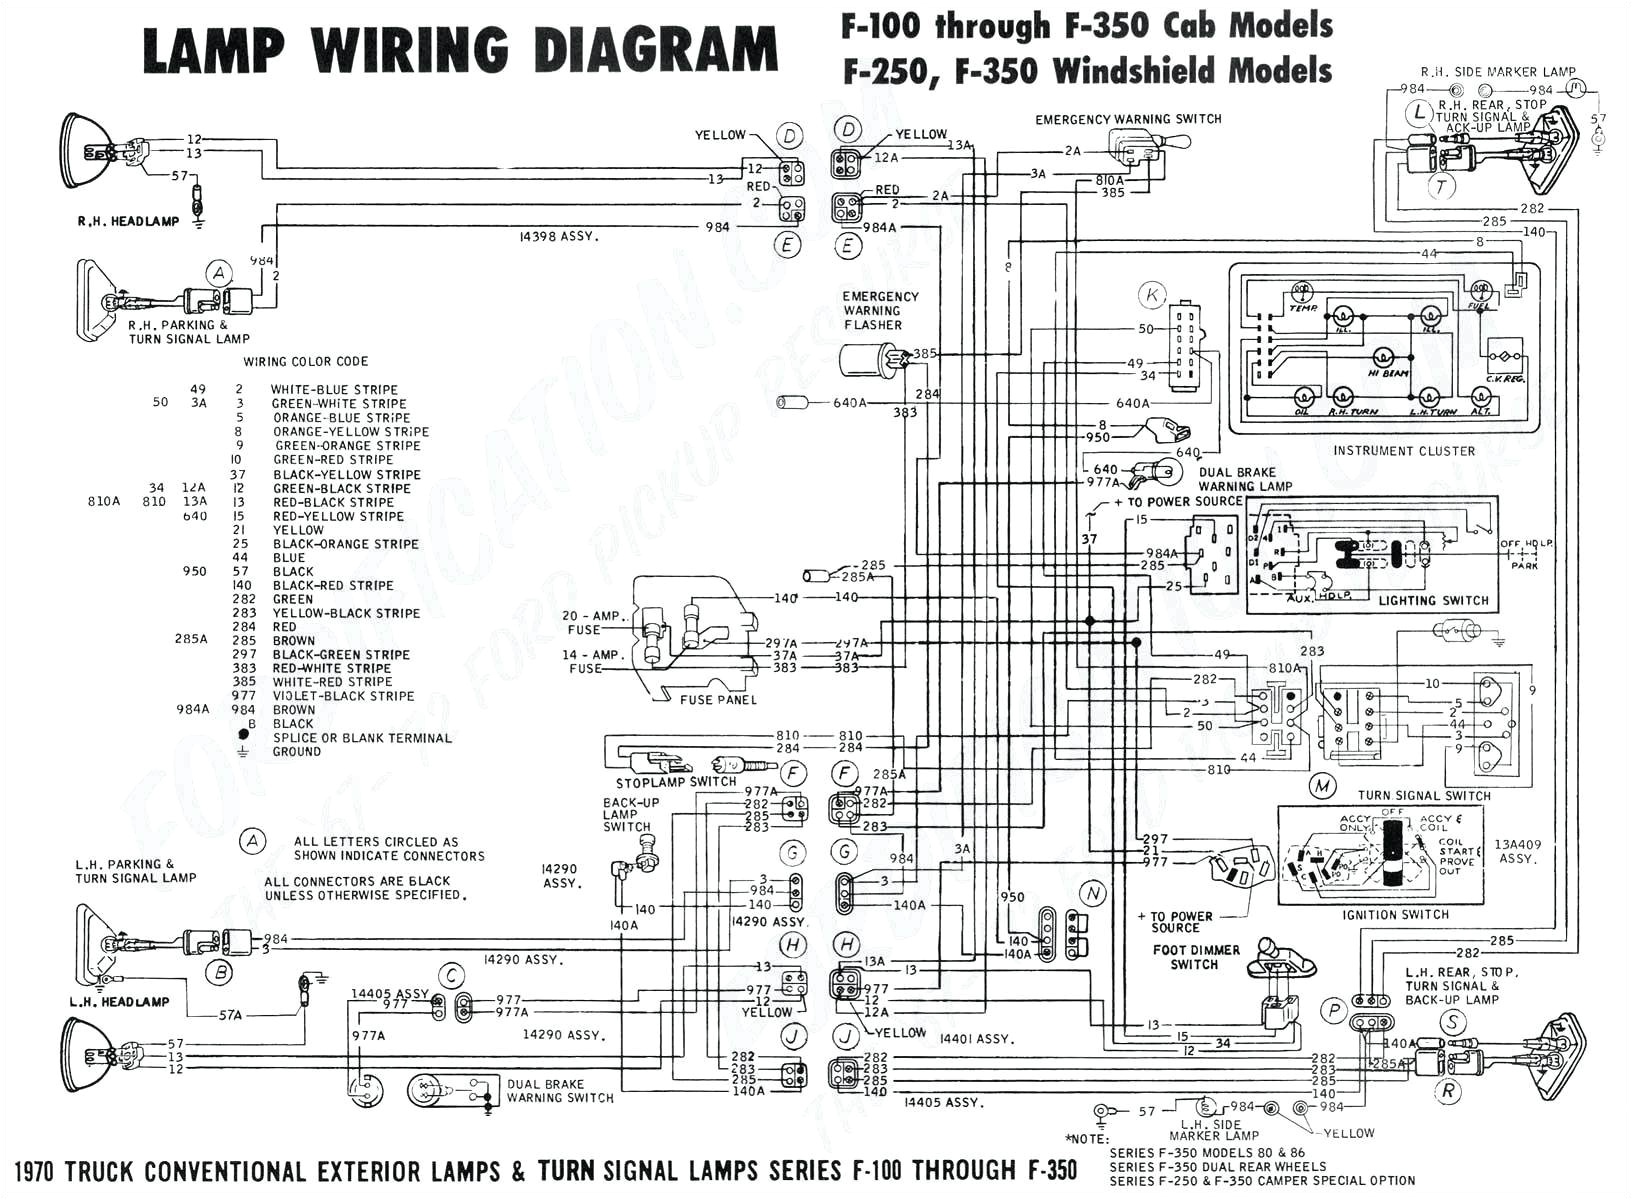 electronic bell circuit diagram tradeoficcom wiring diagram ame door buzzer circuit diagram tradeoficcom wiring diagram show